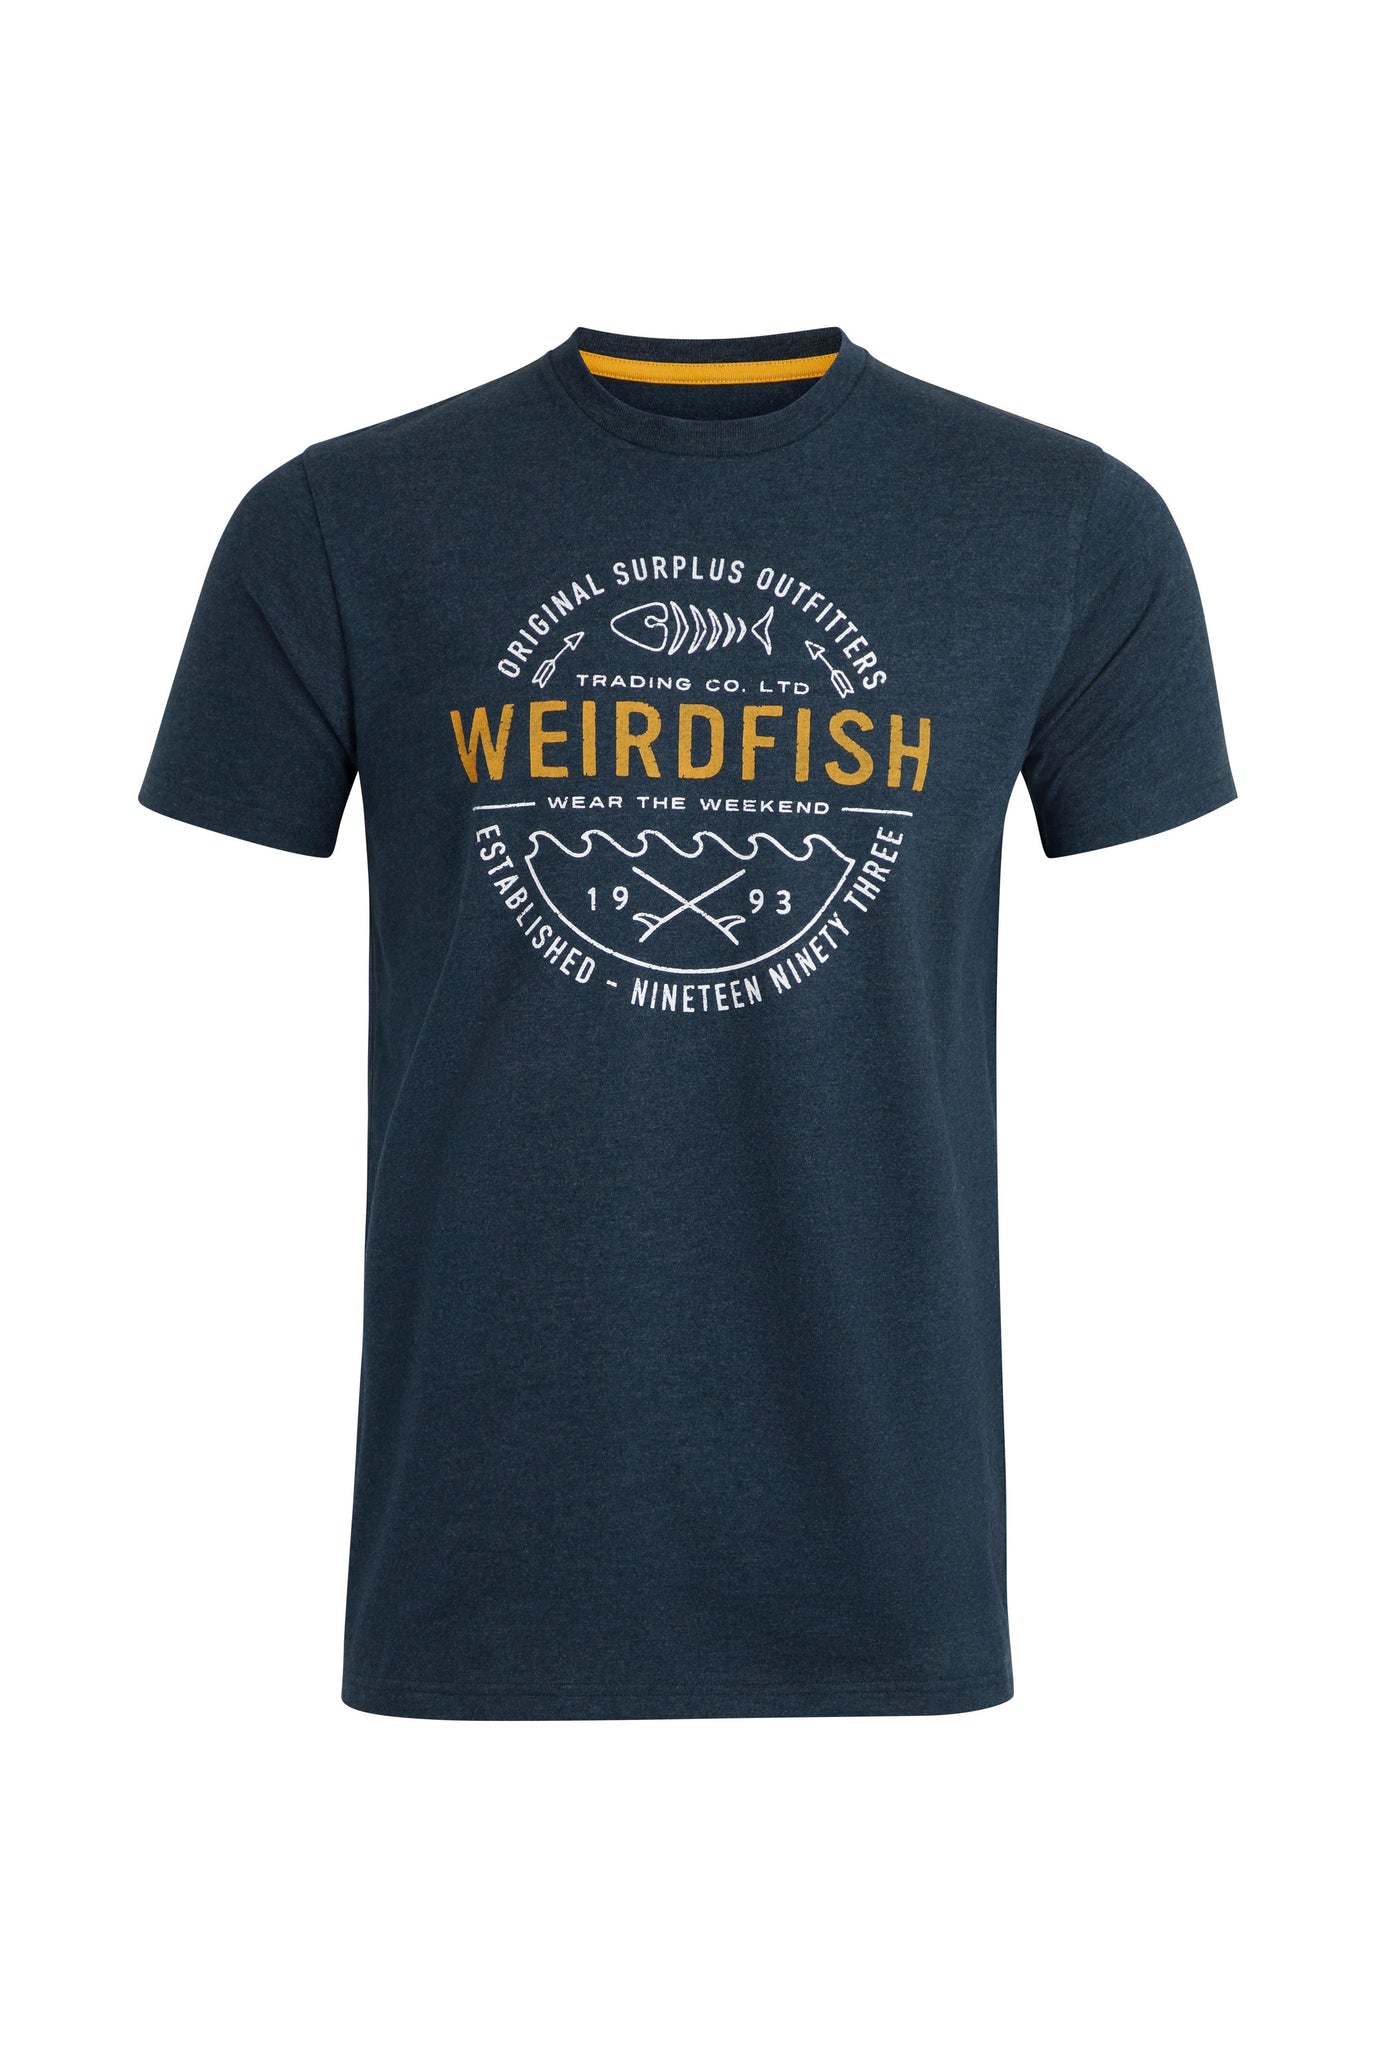 Weird Fish Waves Graphic T-Shirt- Navy